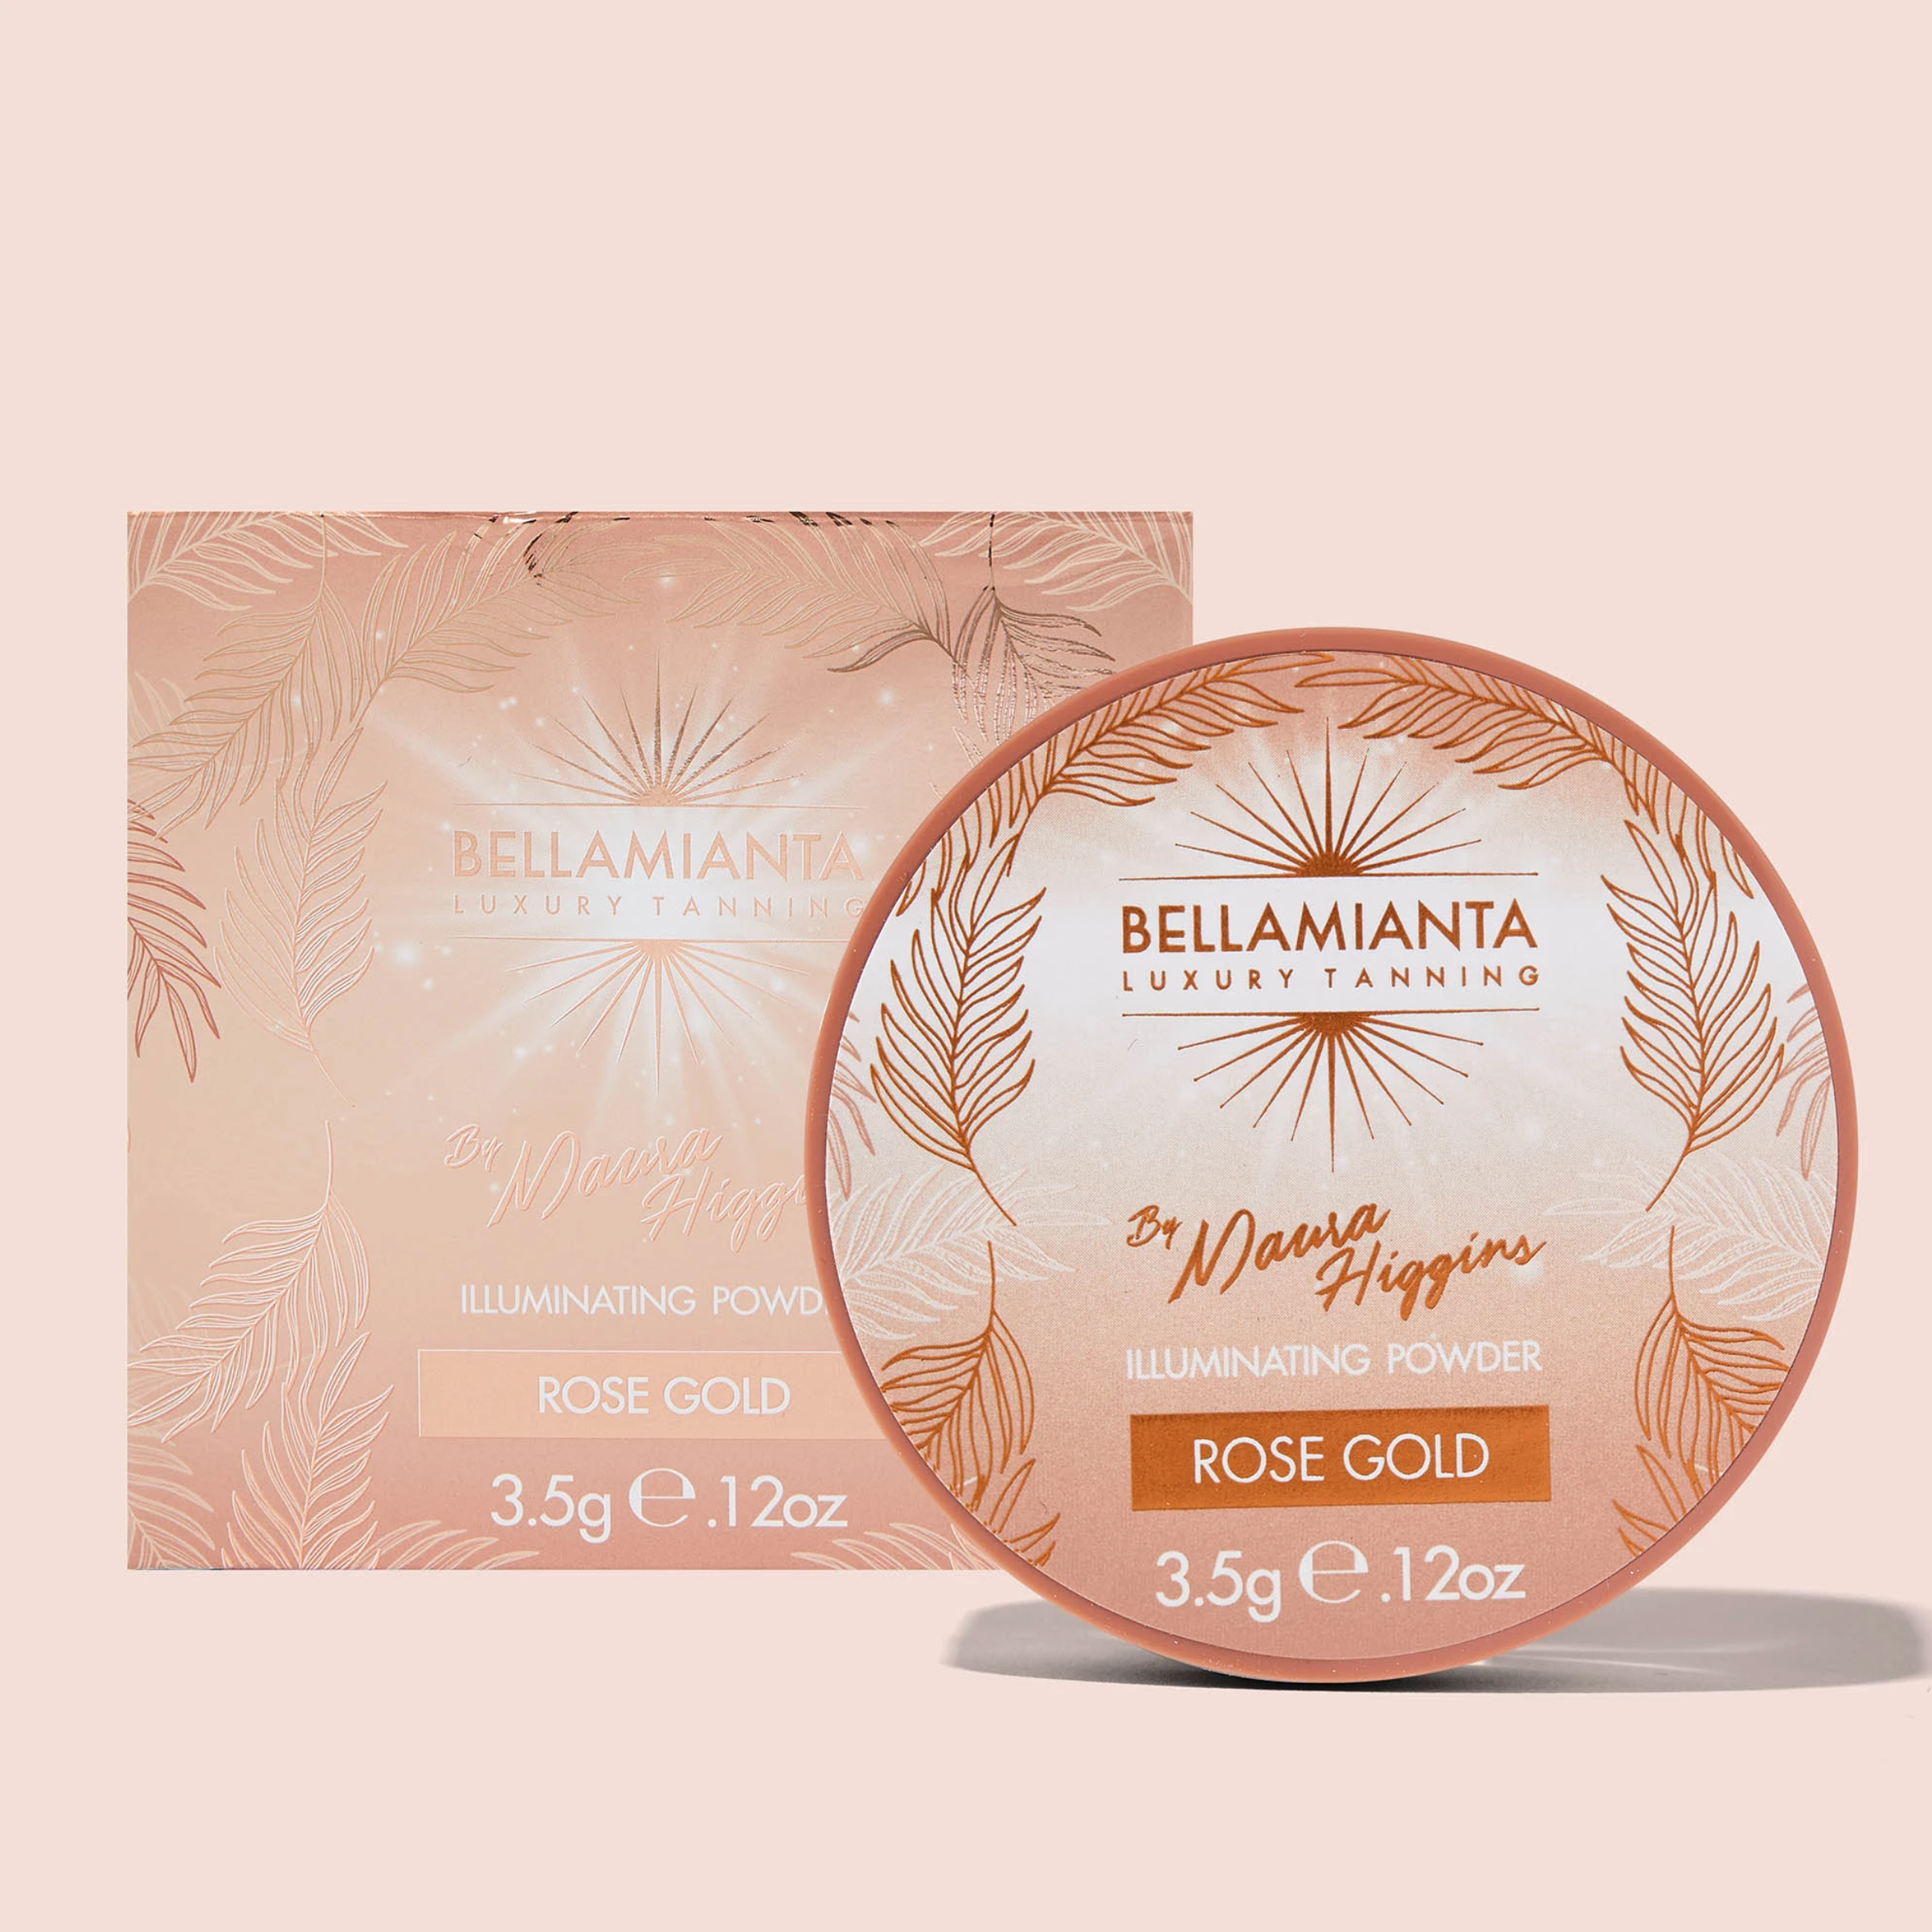 BELLAMIANTA Illuminating Powder by Maura Higgins Rose Gold, with packaging